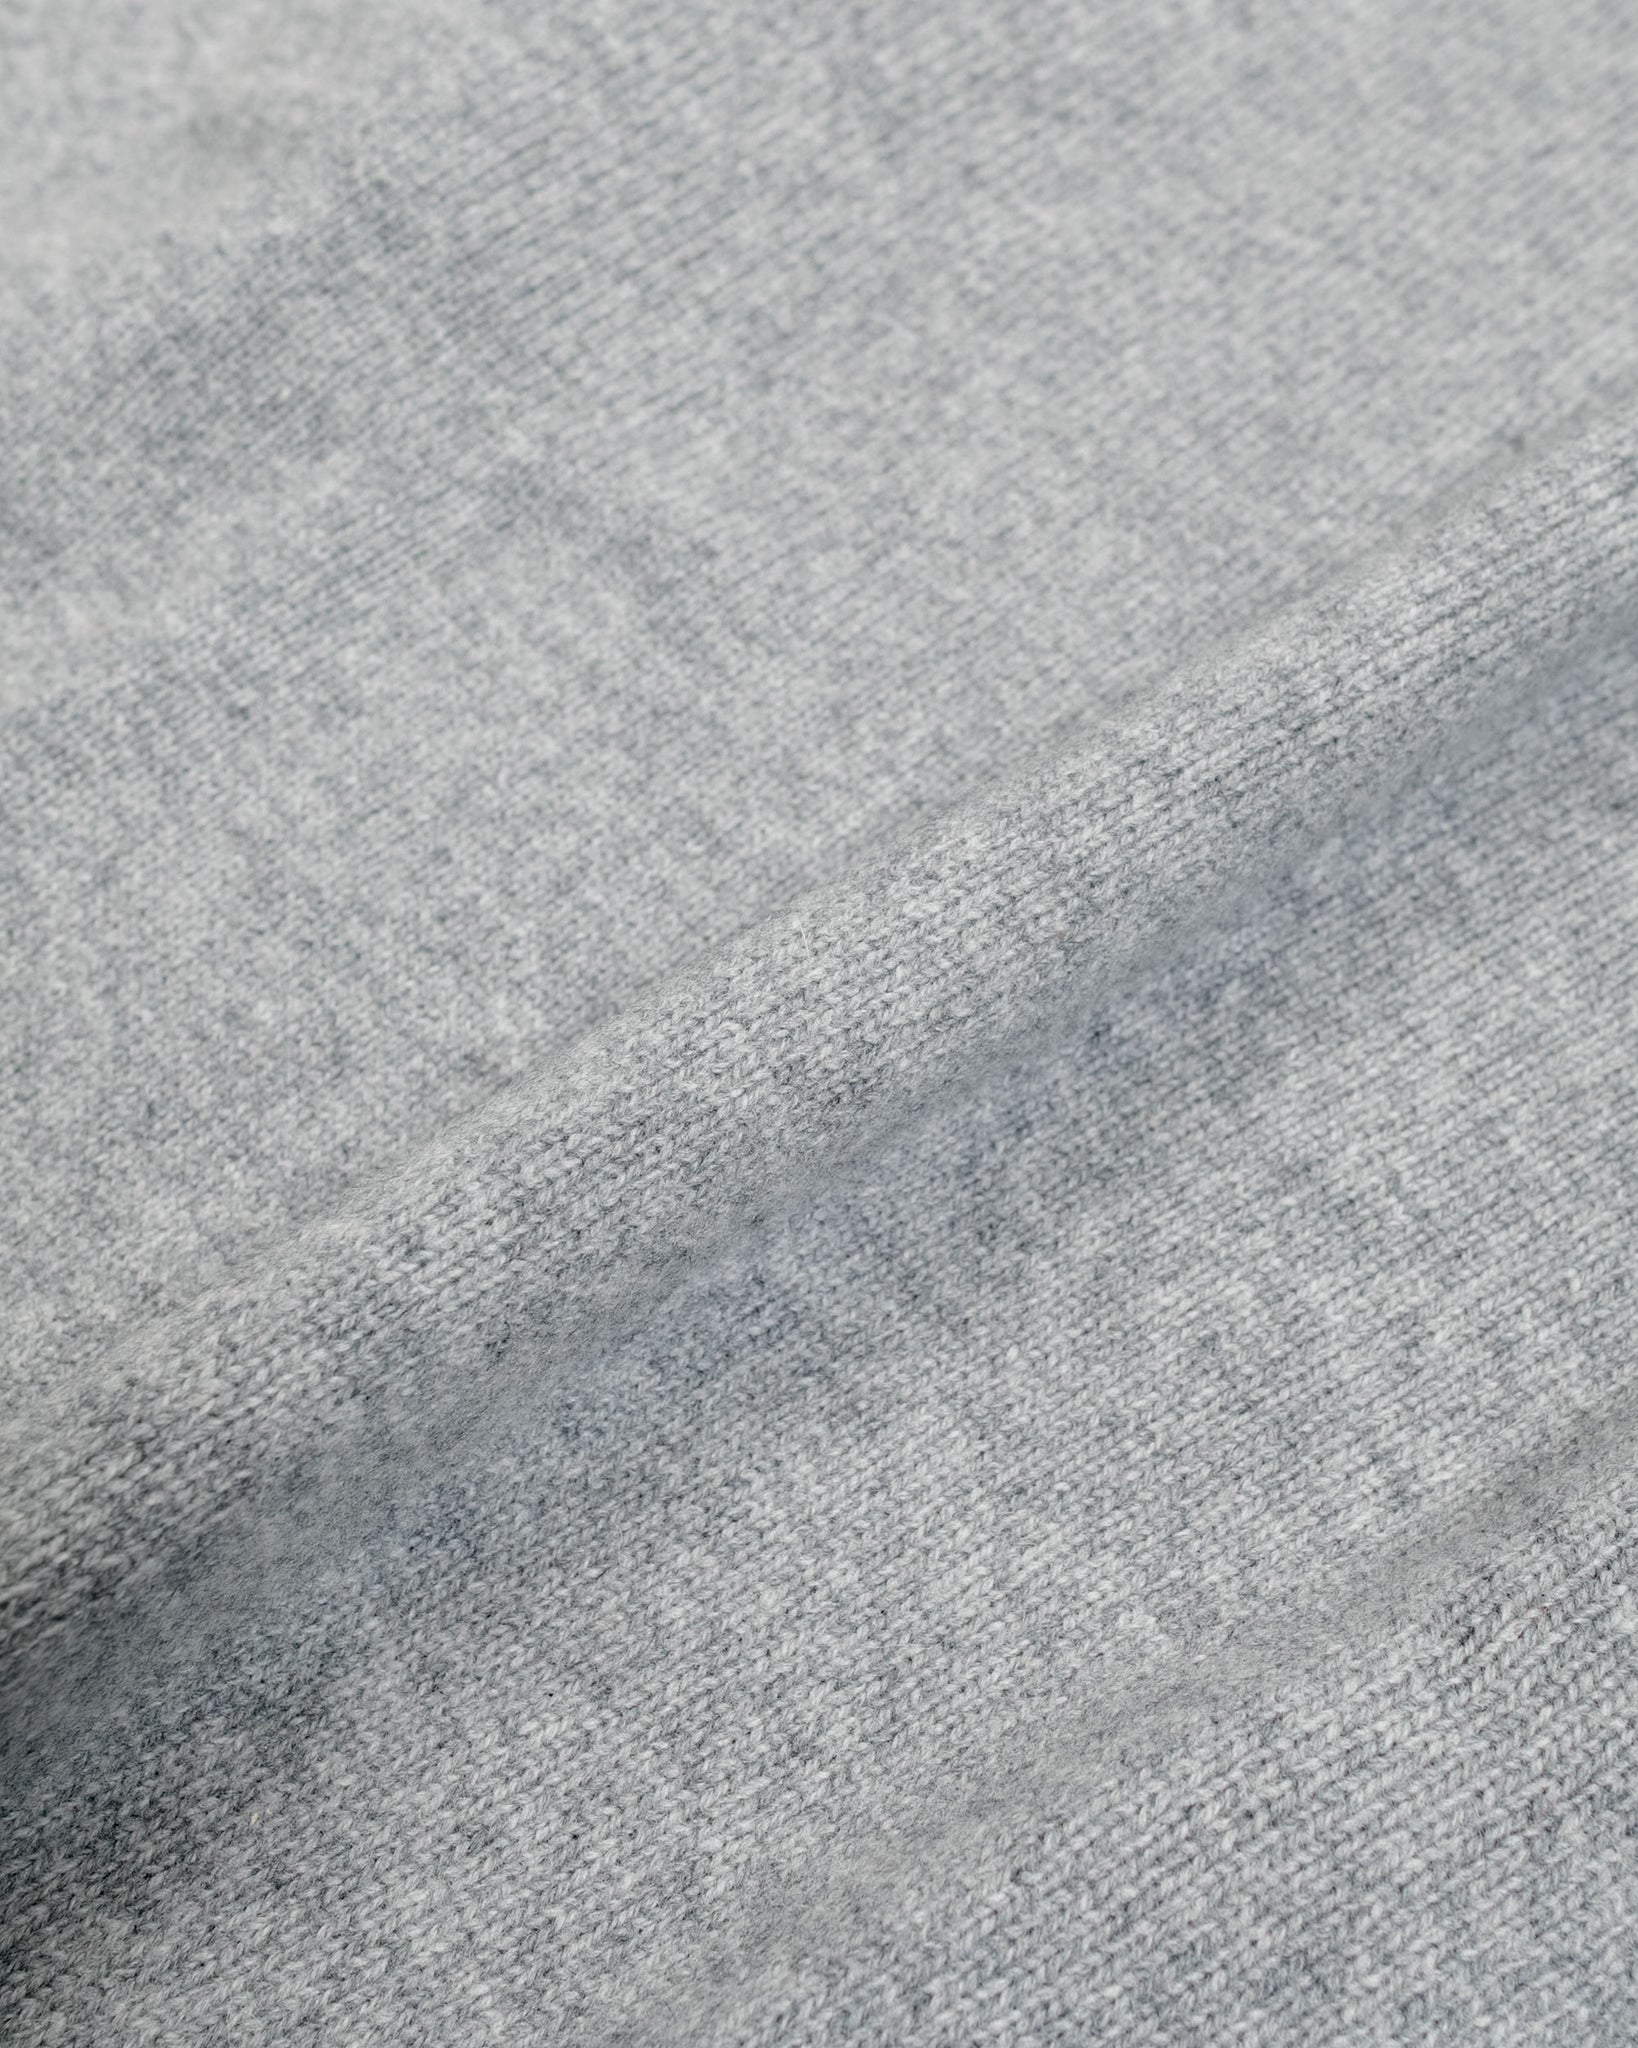 The Real McCoy's MC21114 Wool Crewneck Sweater Grey fabric